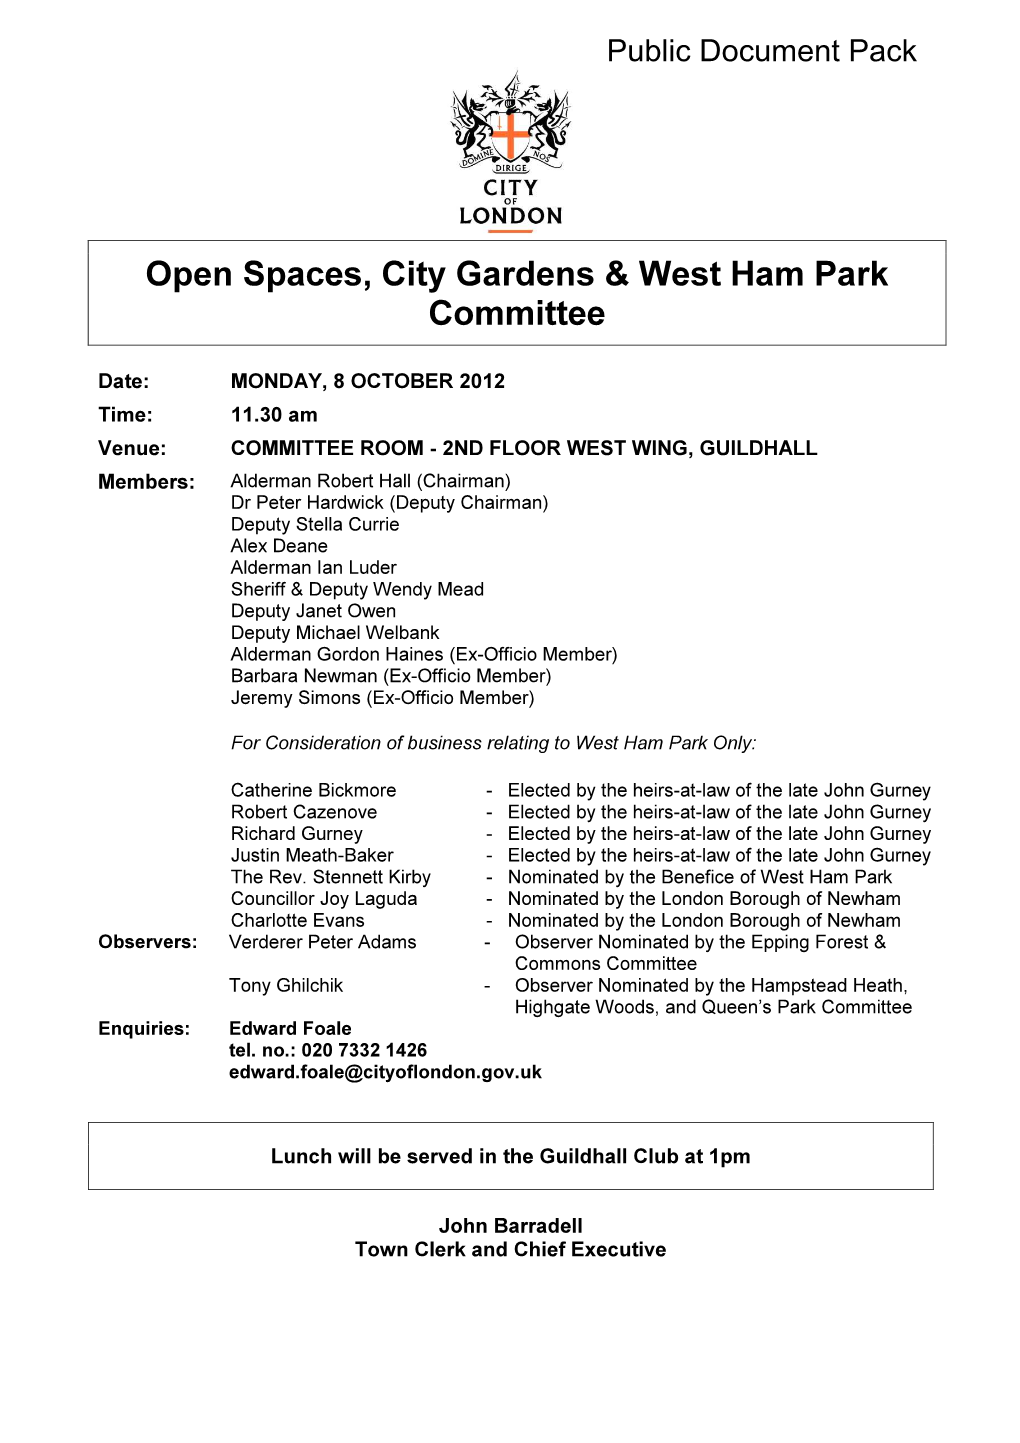 Open Spaces, City Gardens & West Ham Park Committee